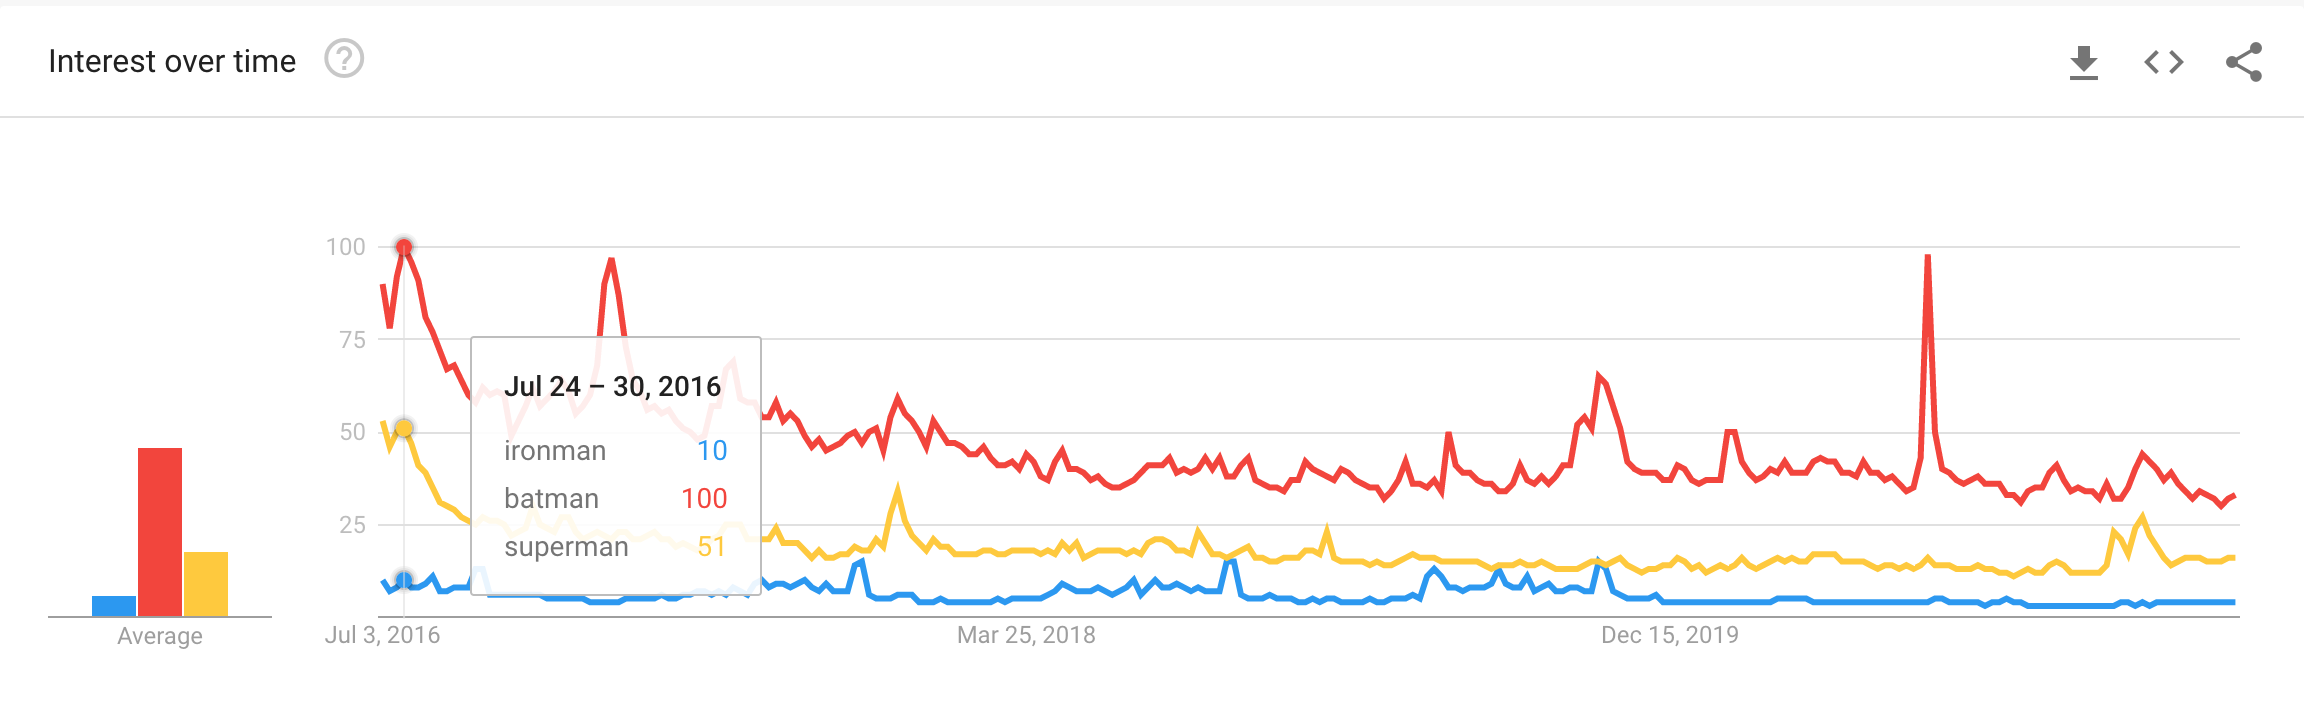 Interest on Google Trends